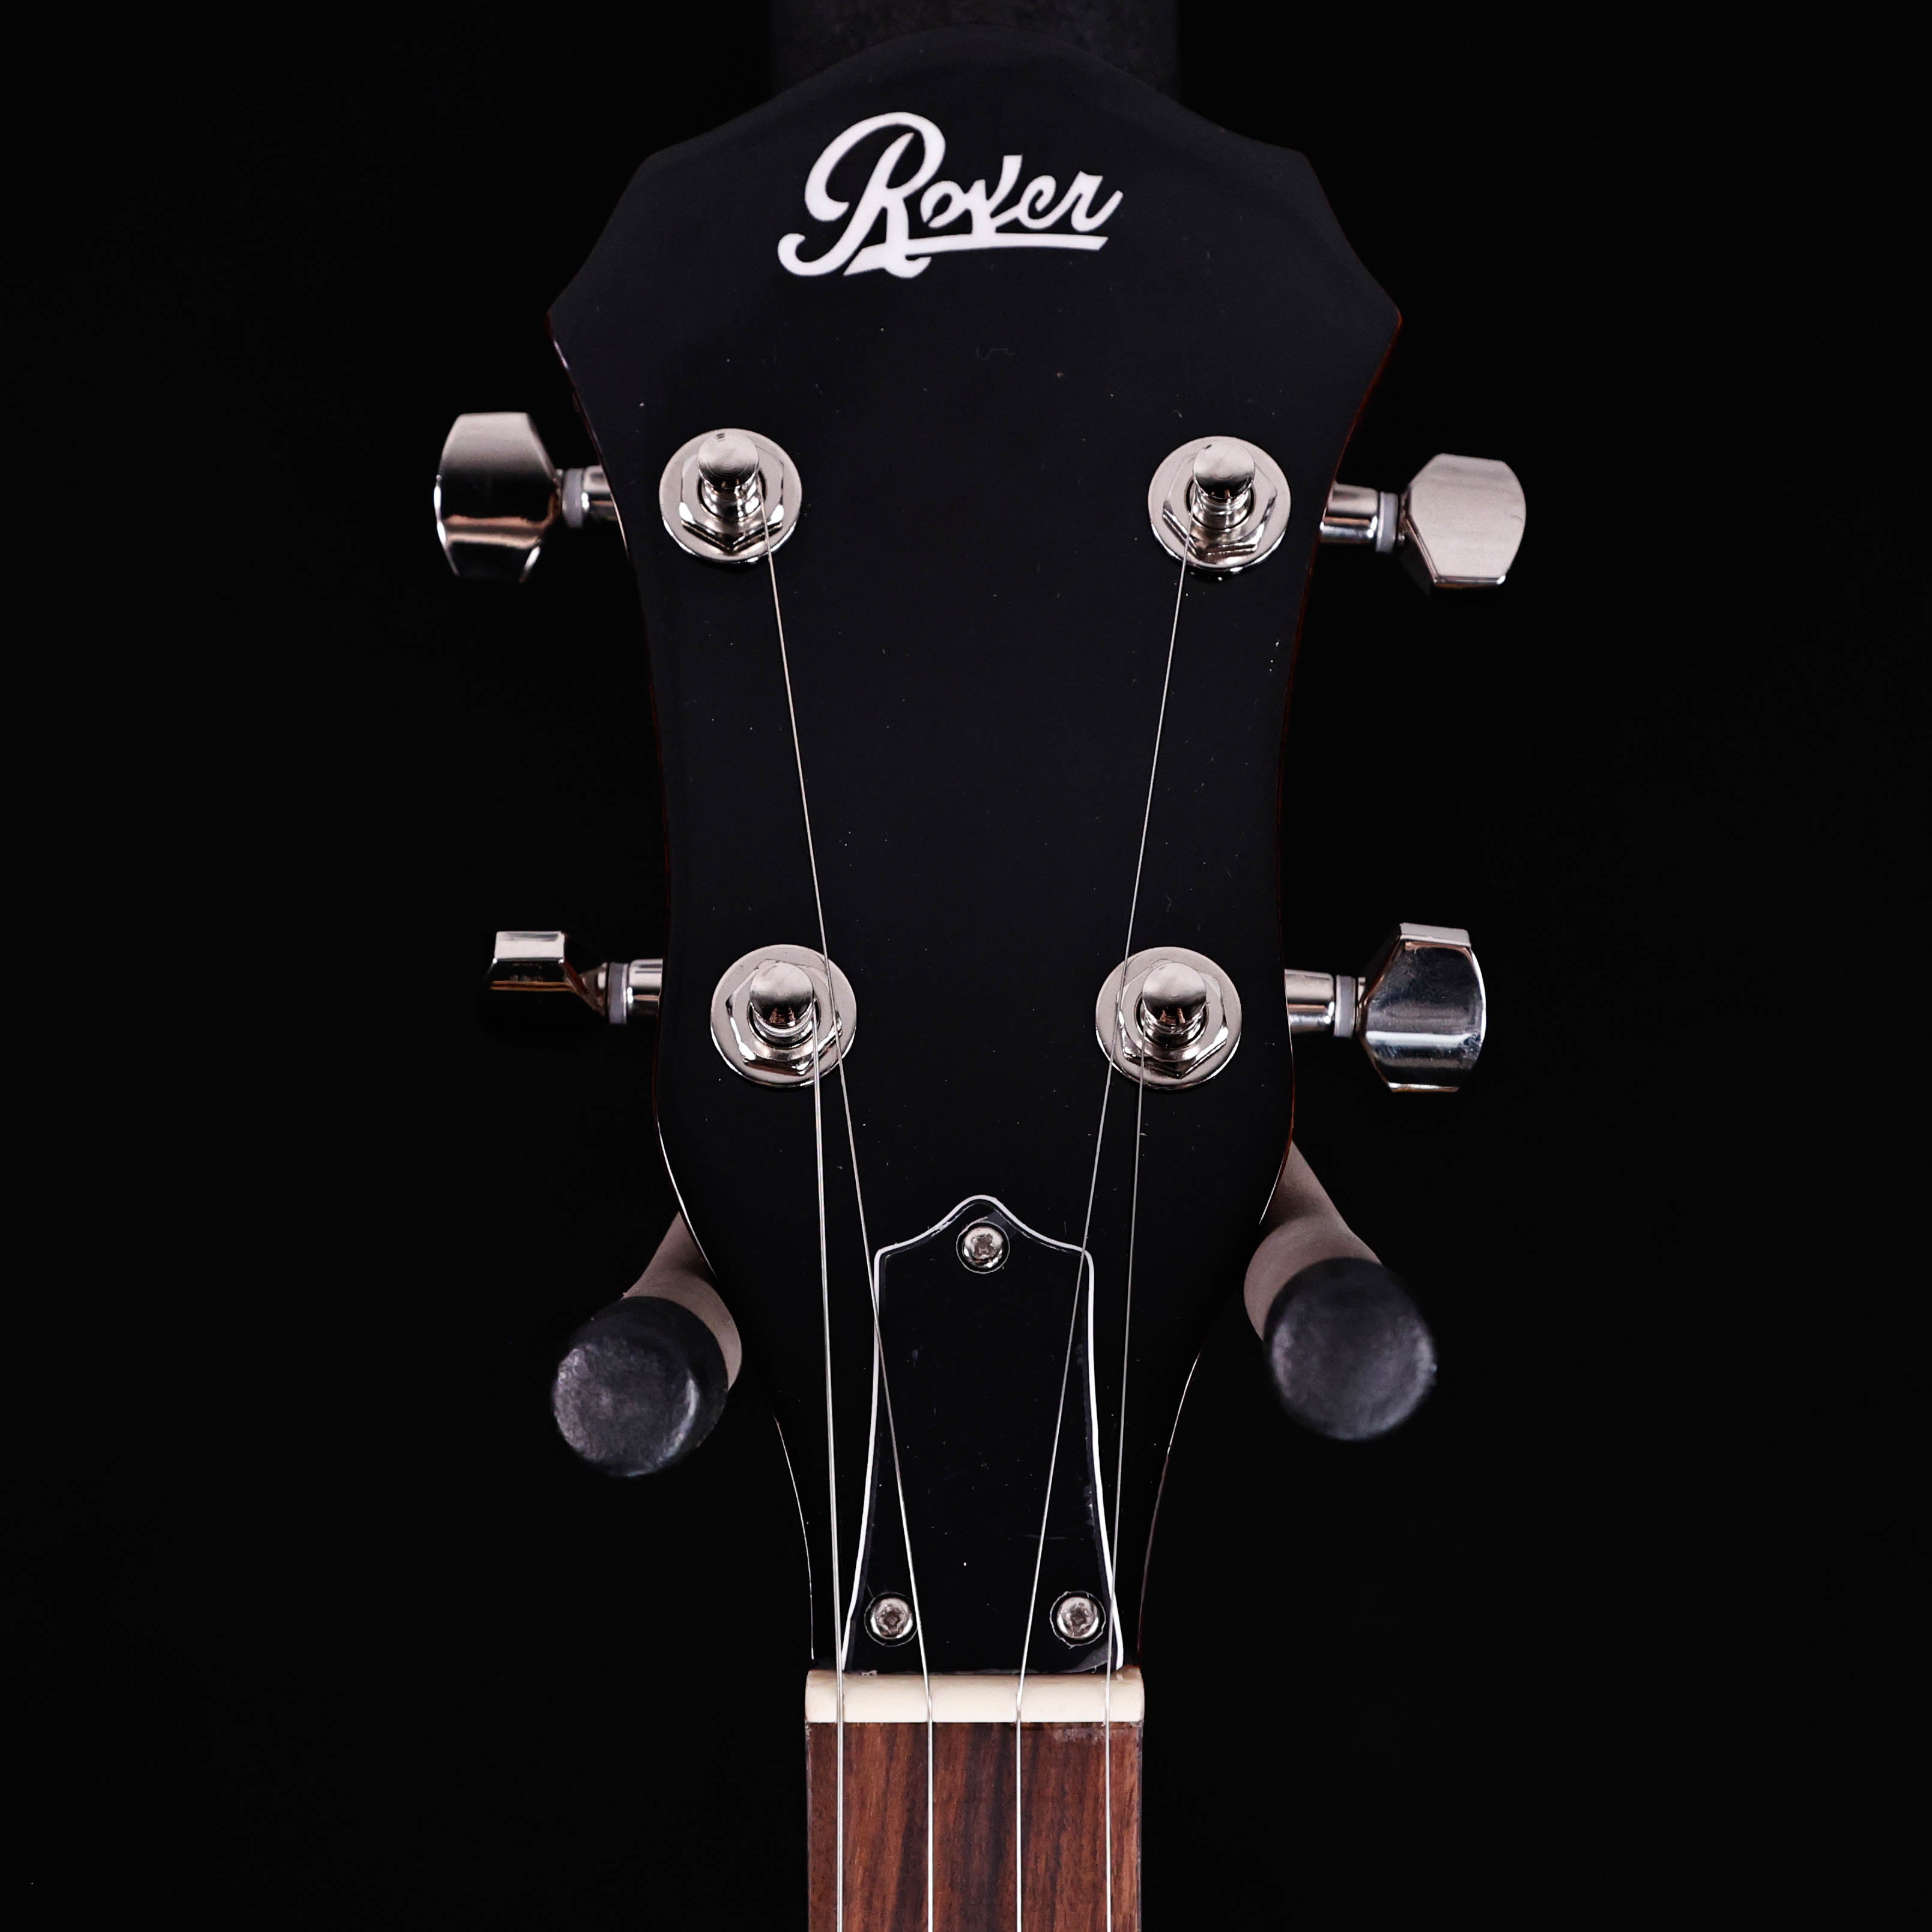 Rover RB-25 Student 5-String Resonator Banjo